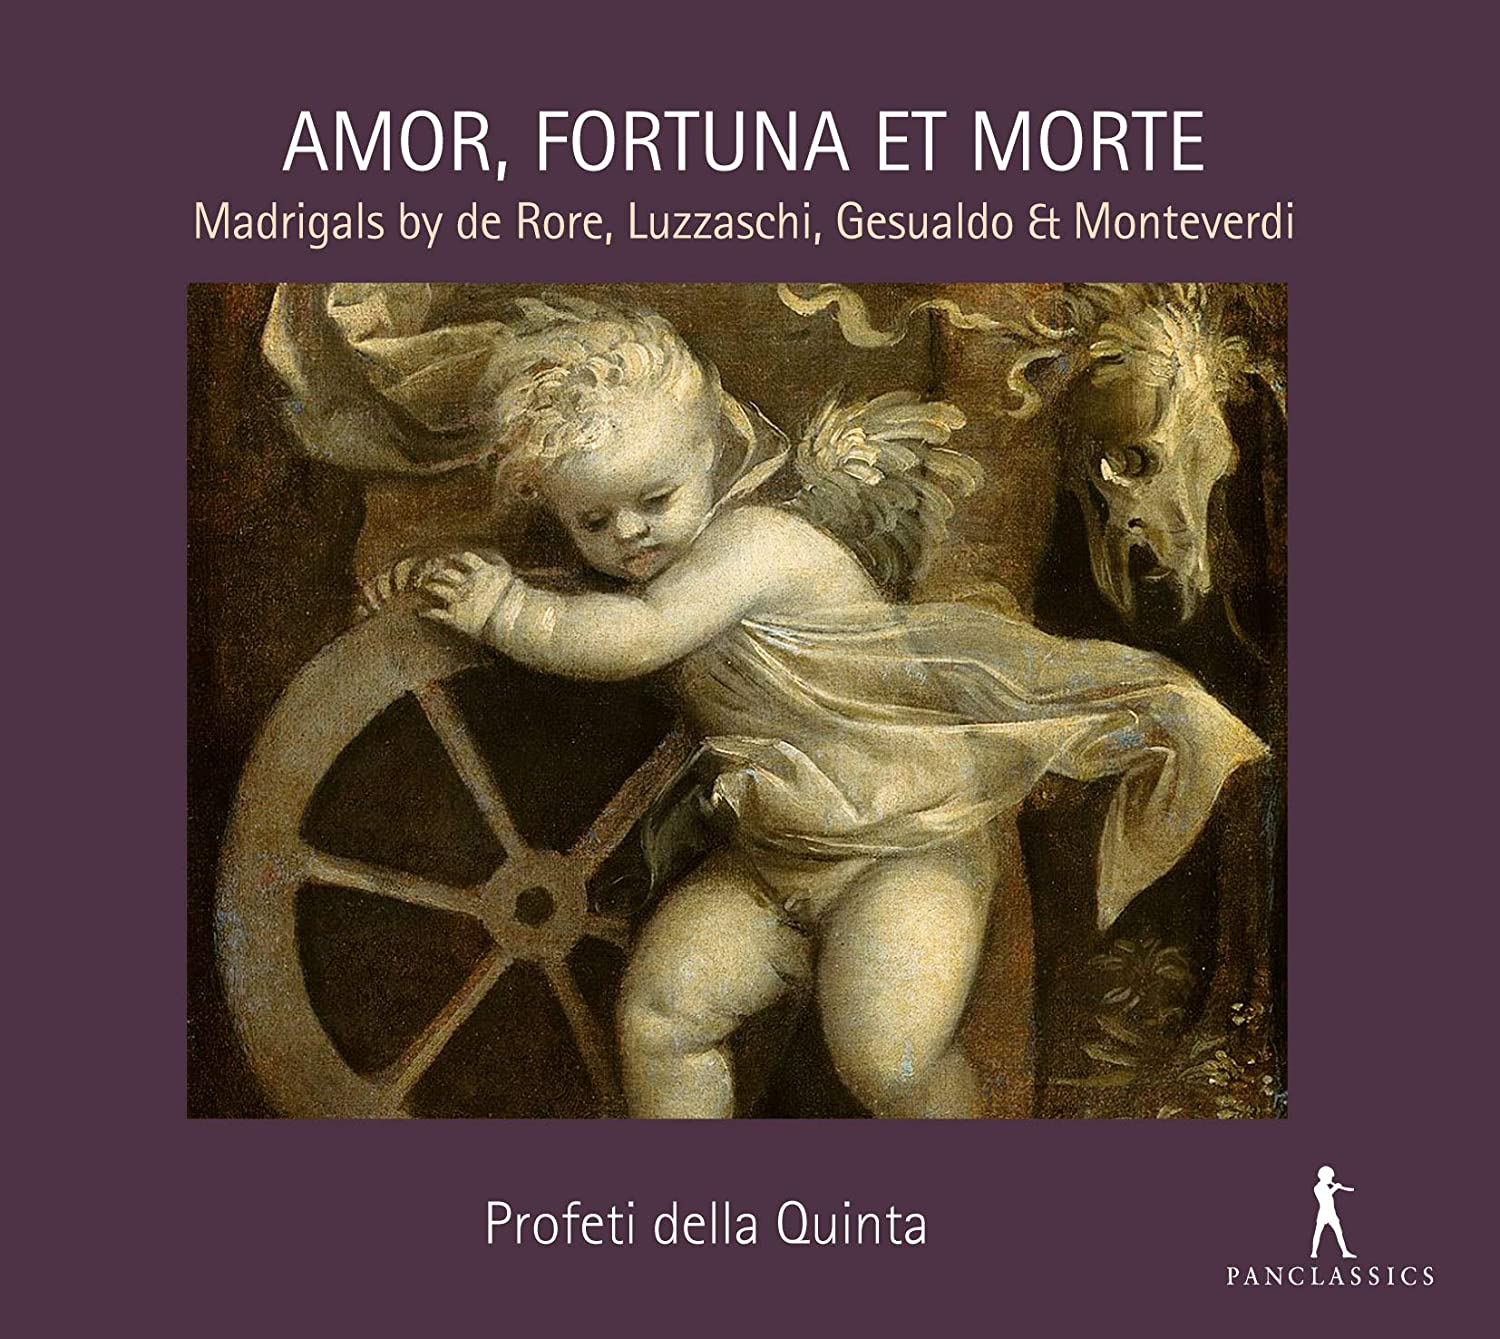 Amor Fortuna et Morte CD cover